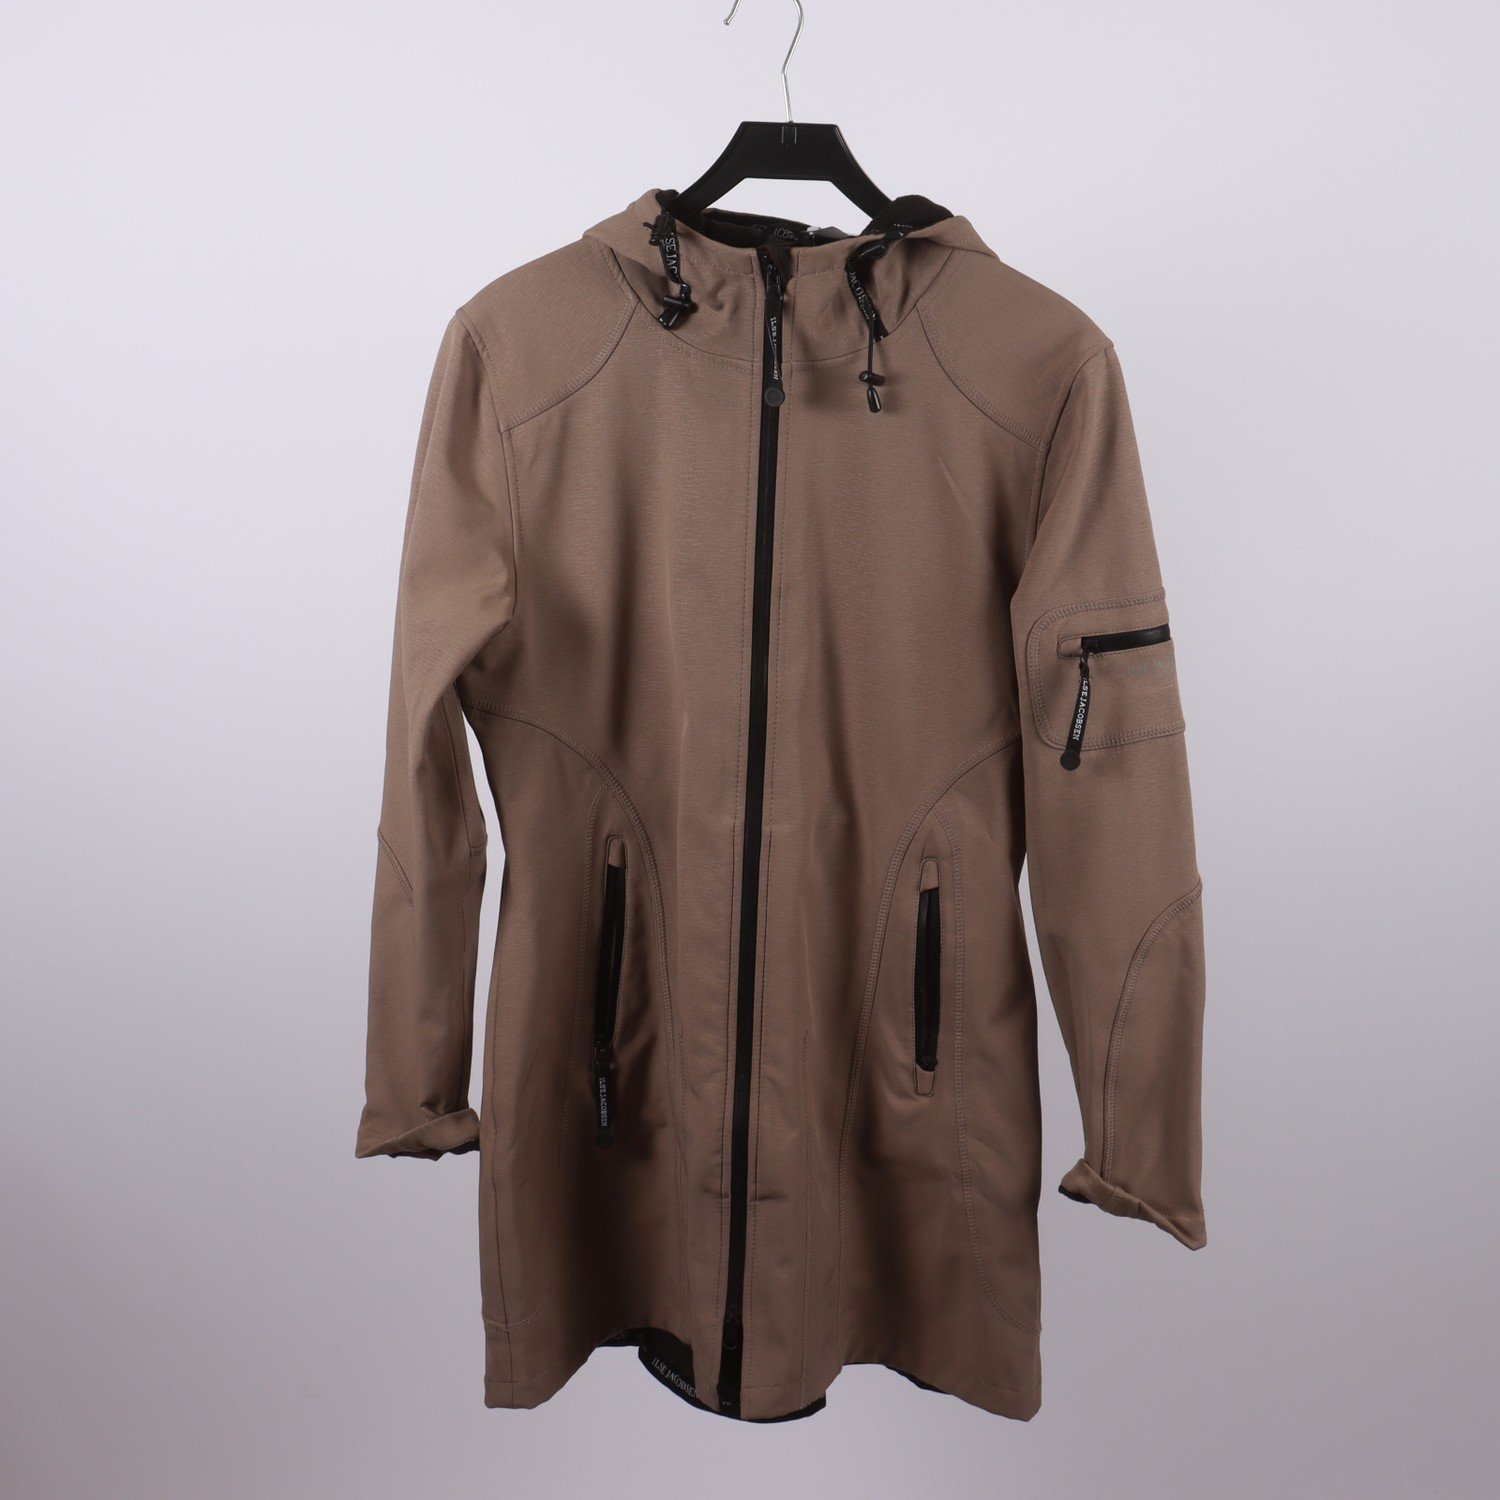 Kappa, rain coat, beige, stl. 40